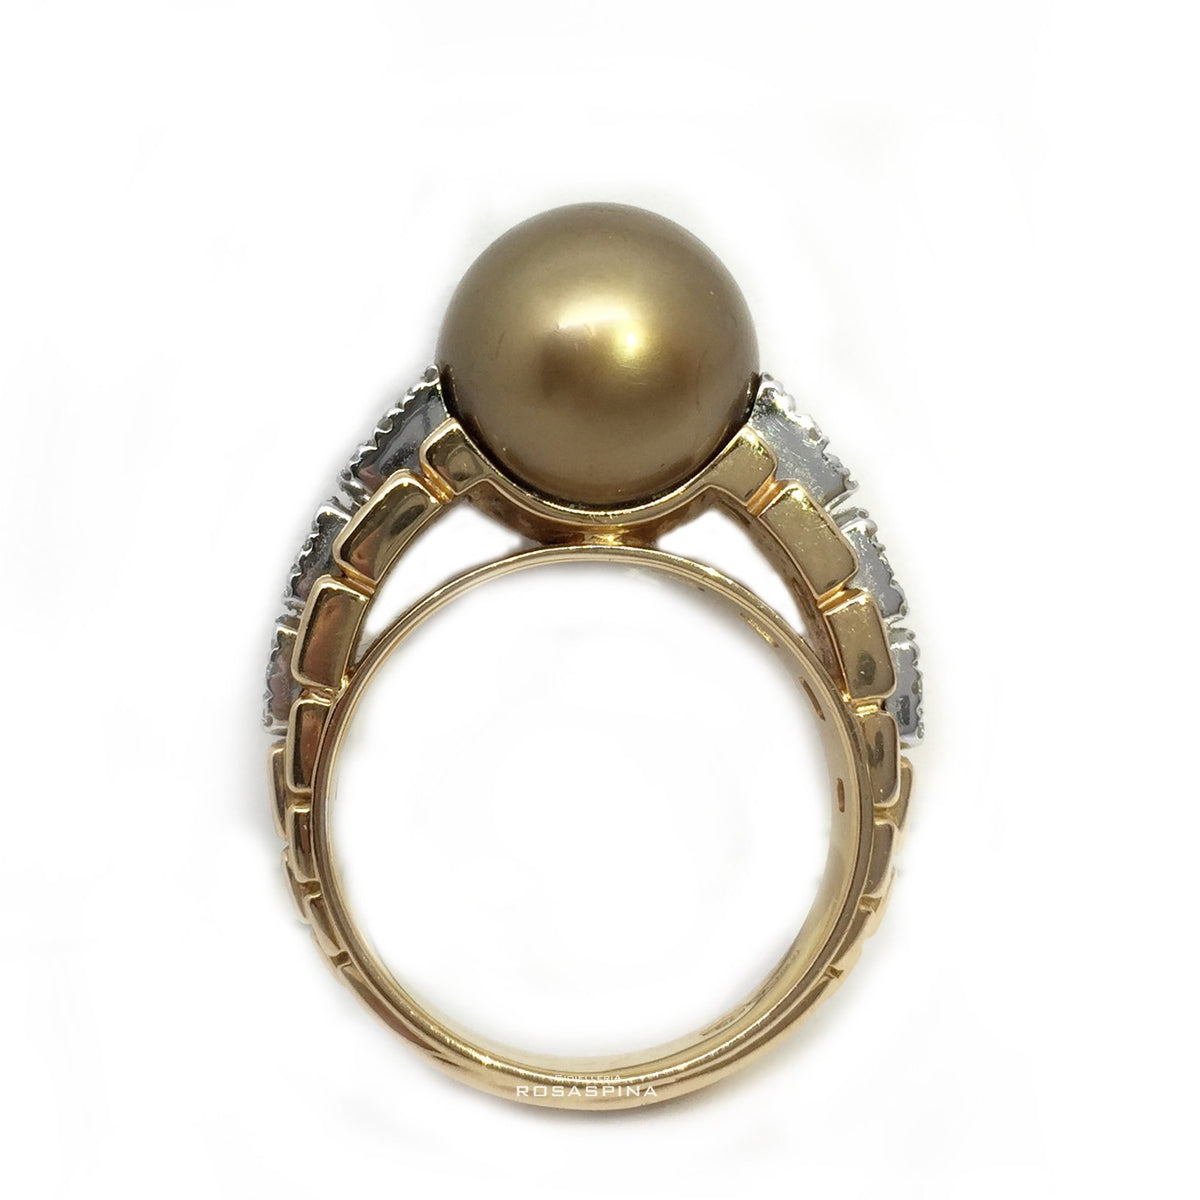 Fope ring in Mondrian AN993 BTCH PINK gold